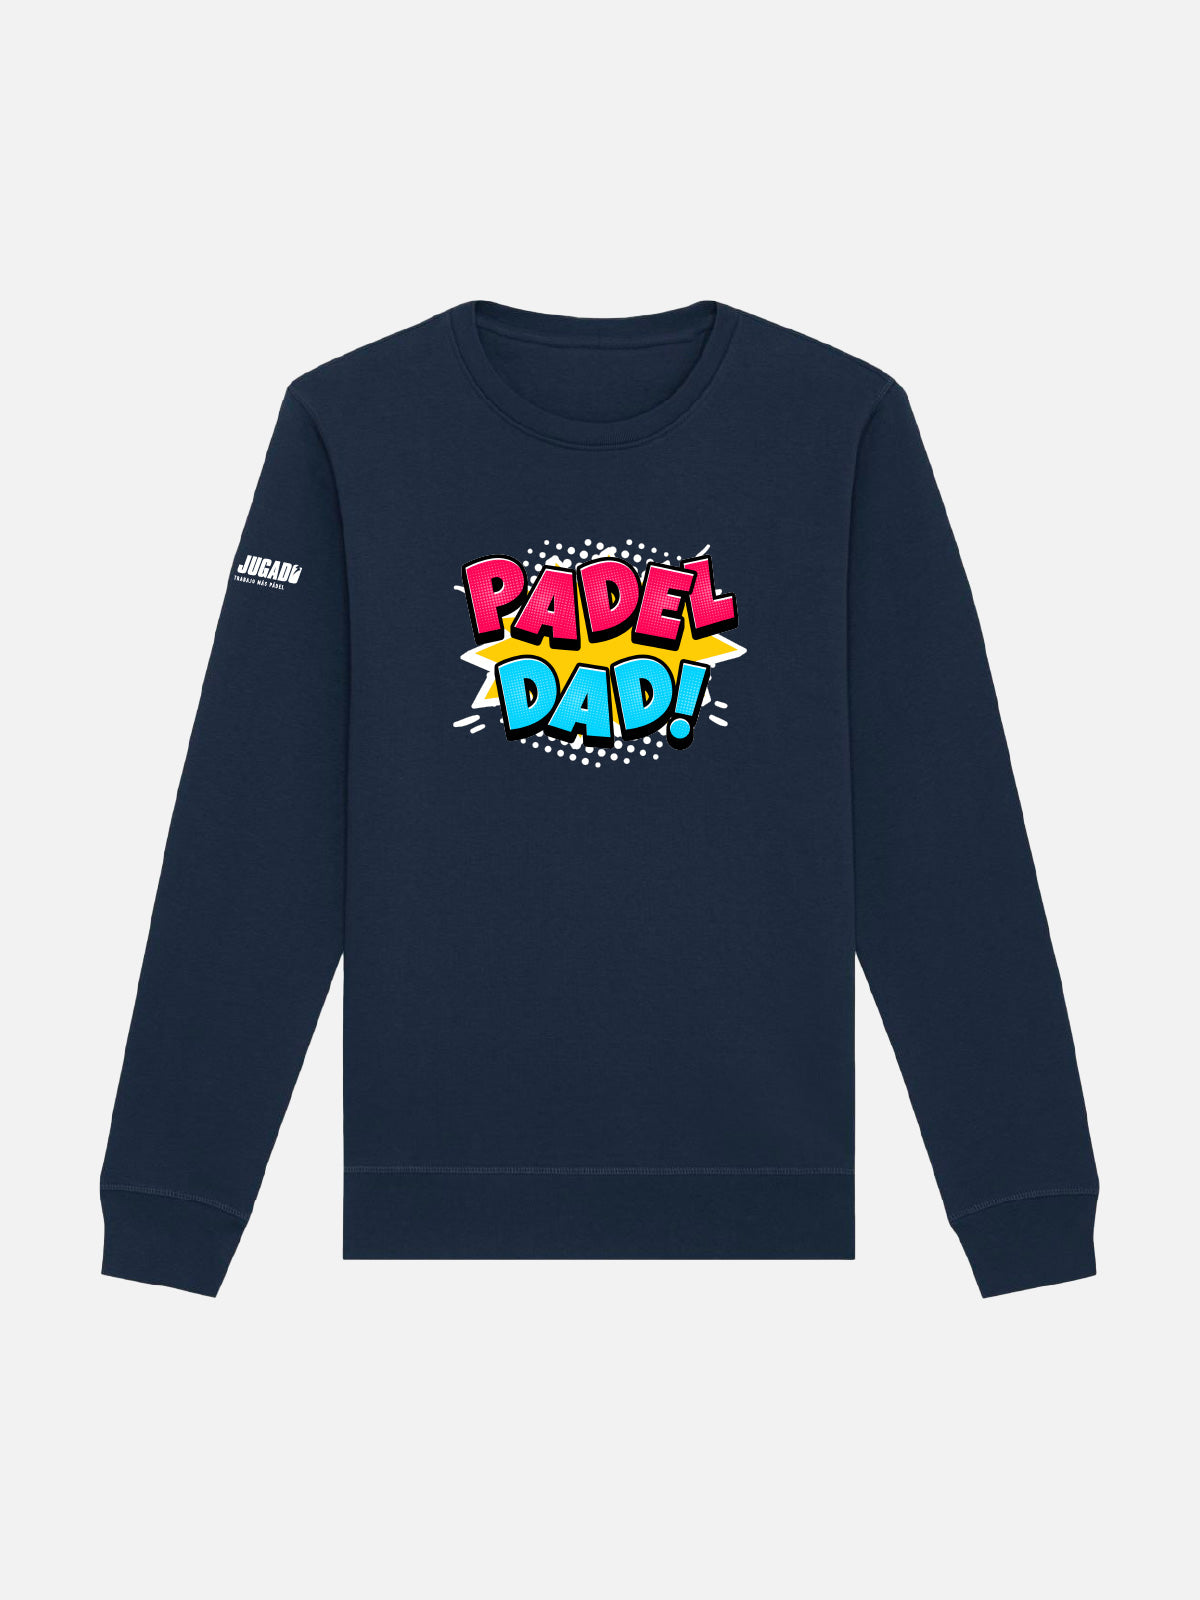 Fun Unisex Sweatshirt - Padel Dad